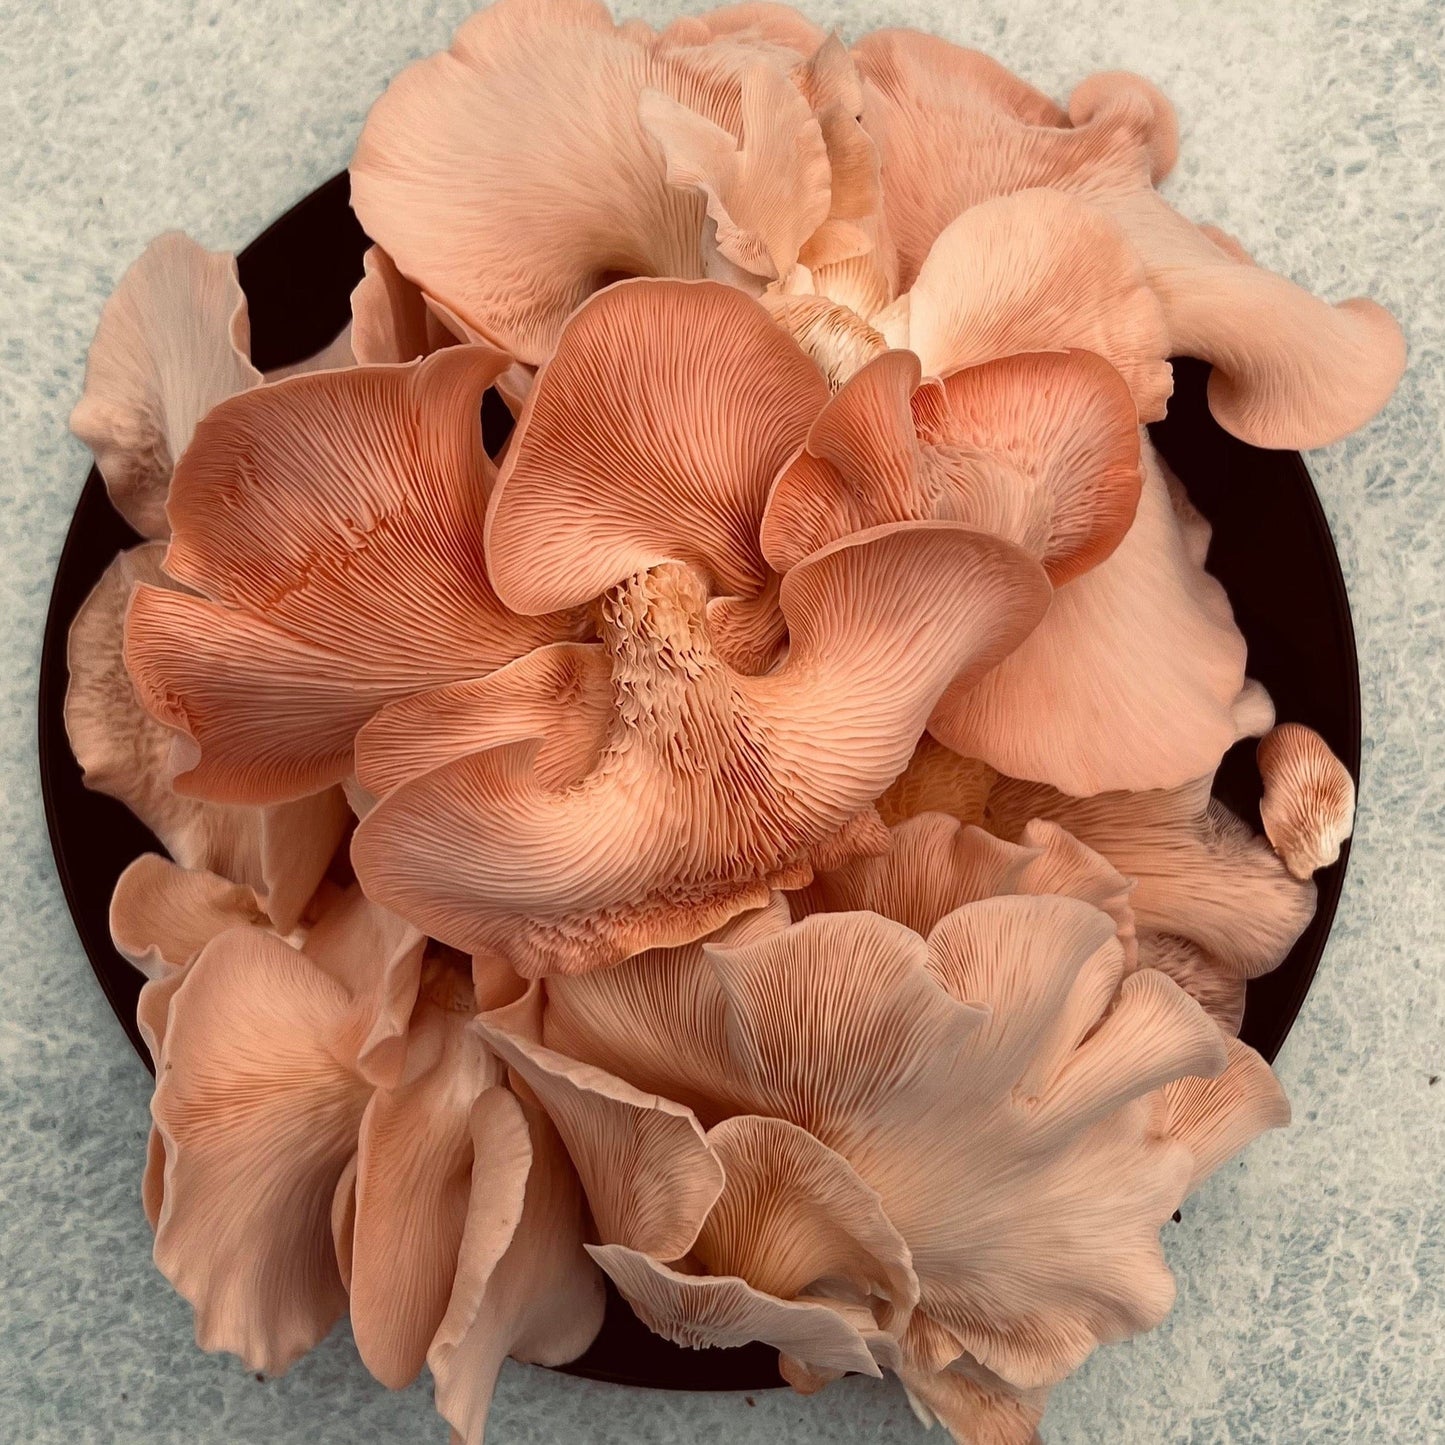 Organic Oyster Mushroom Growkit